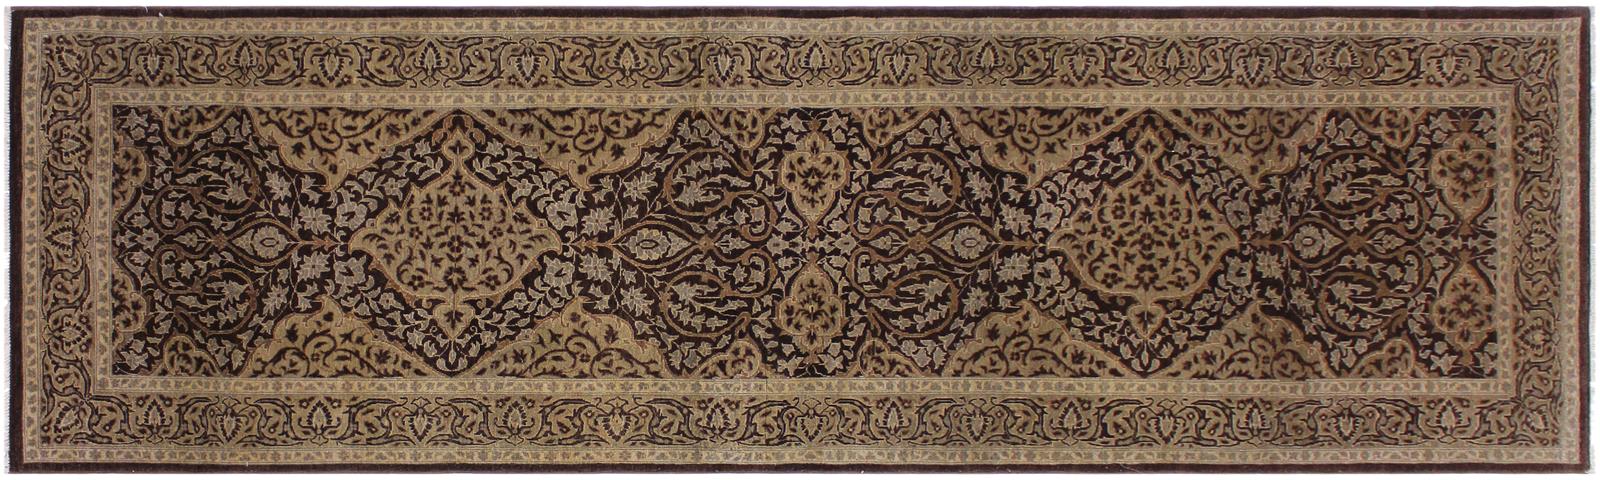 handmade Transitional Veg Dye Brown Tan Hand Knotted RUNNER 100% WOOL area rug 3x12